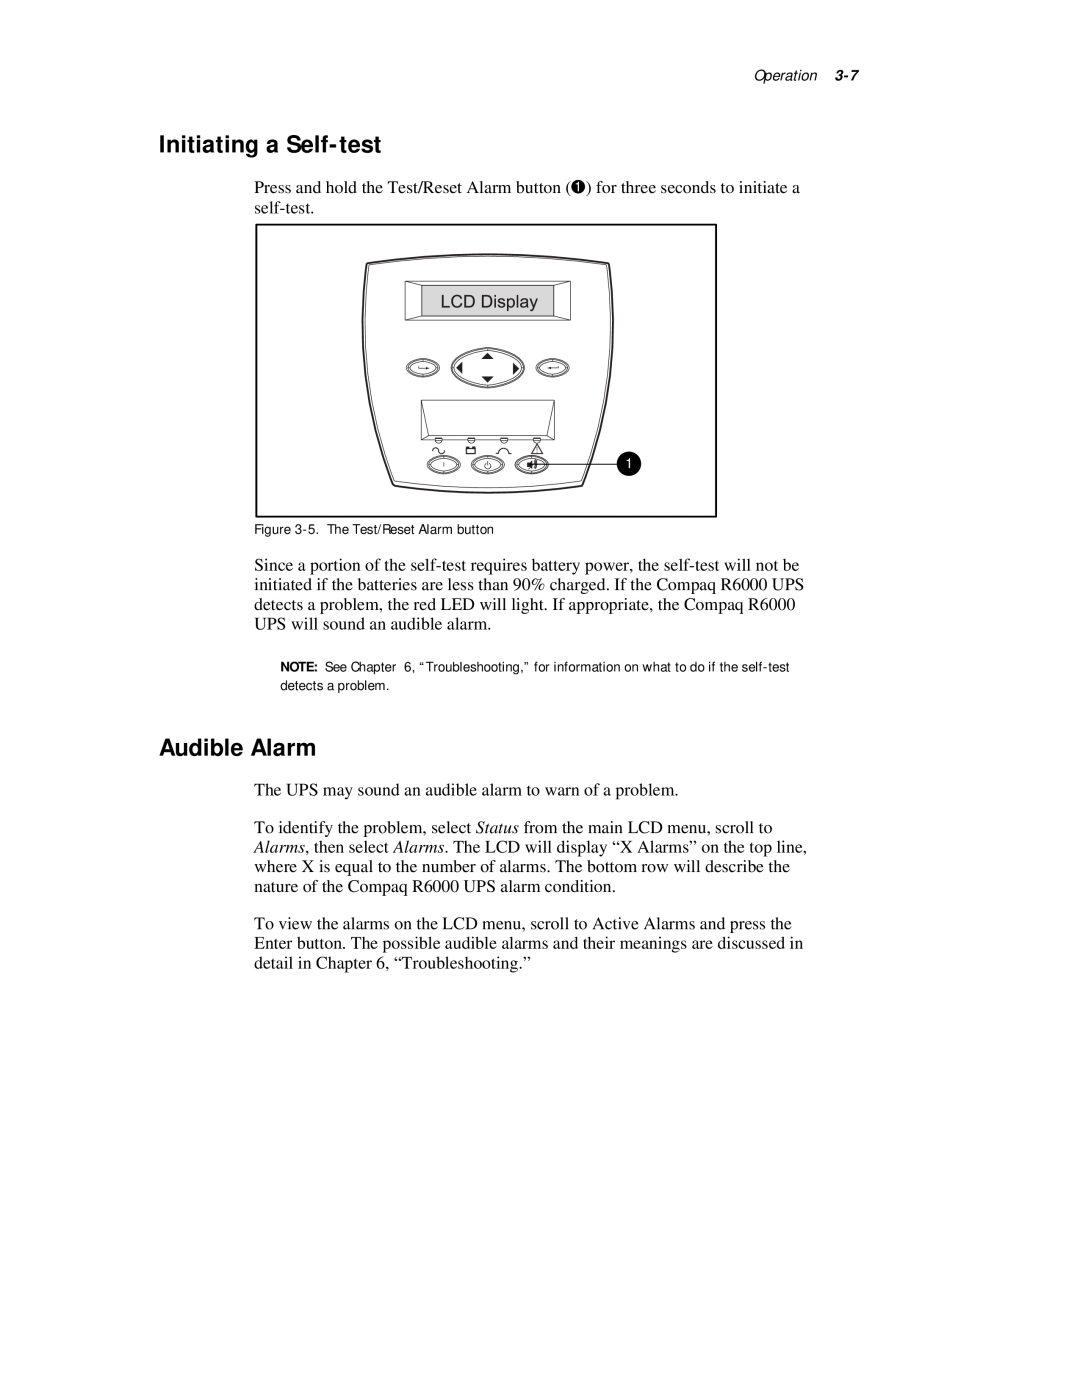 Compaq R6000 Series manual Initiating a Self-test, Audible Alarm, Operation 